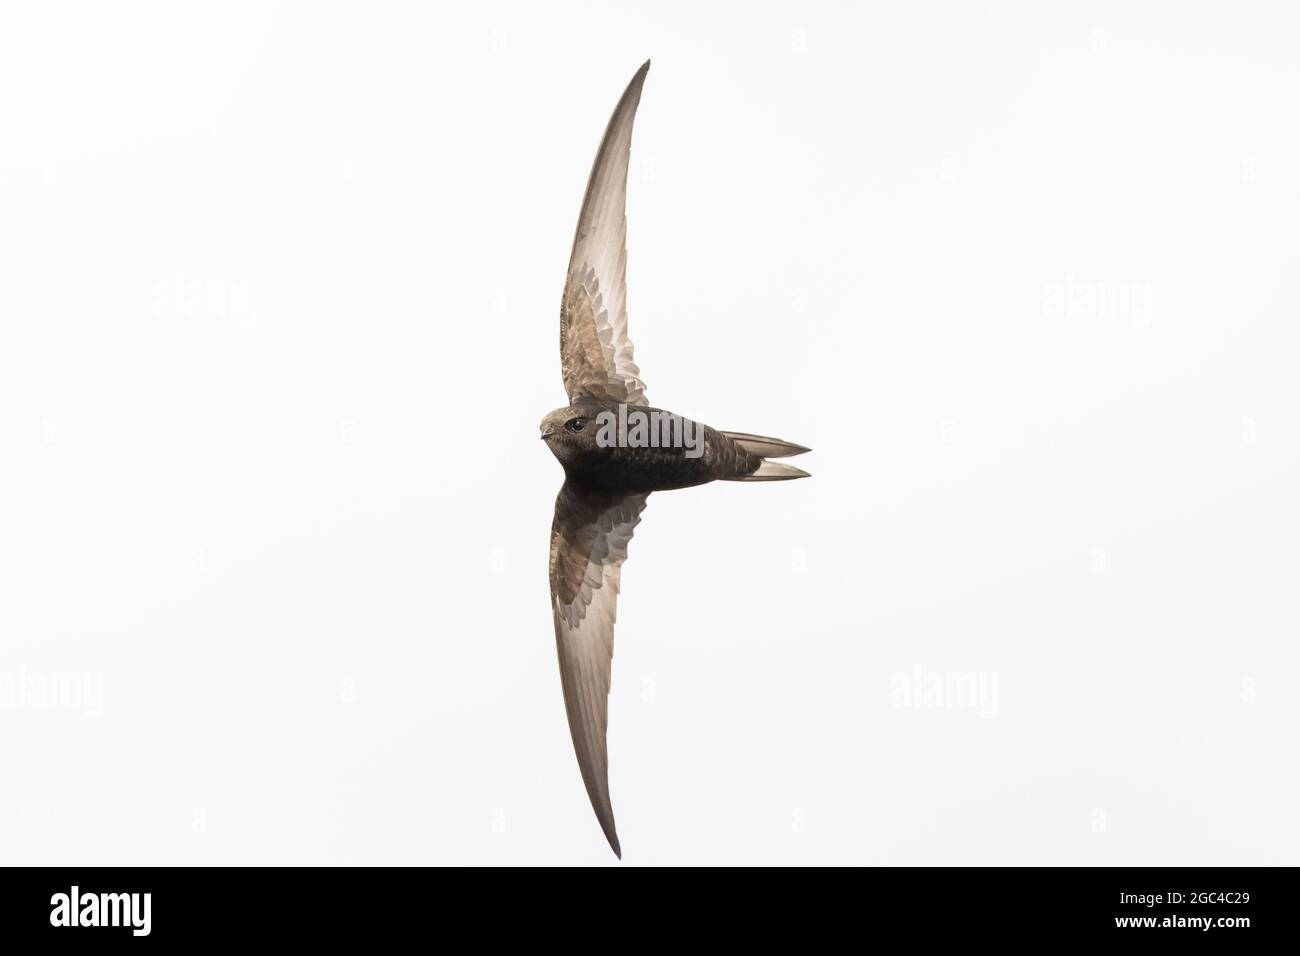 Common swift Apus apus, swallow bird in flight against a white background Stock Photo